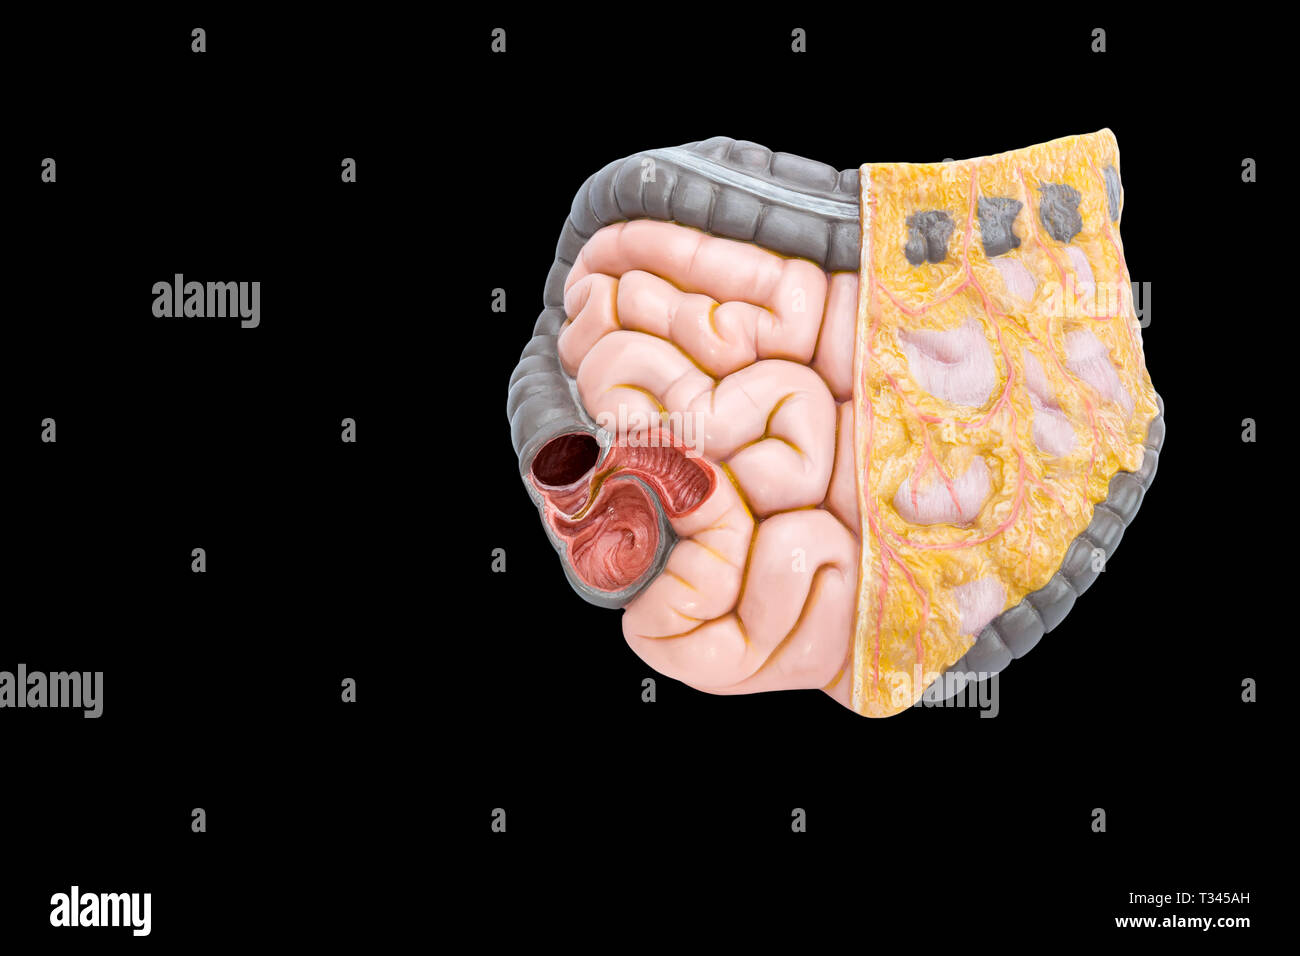 Human intestines model isolated on black background Stock Photo